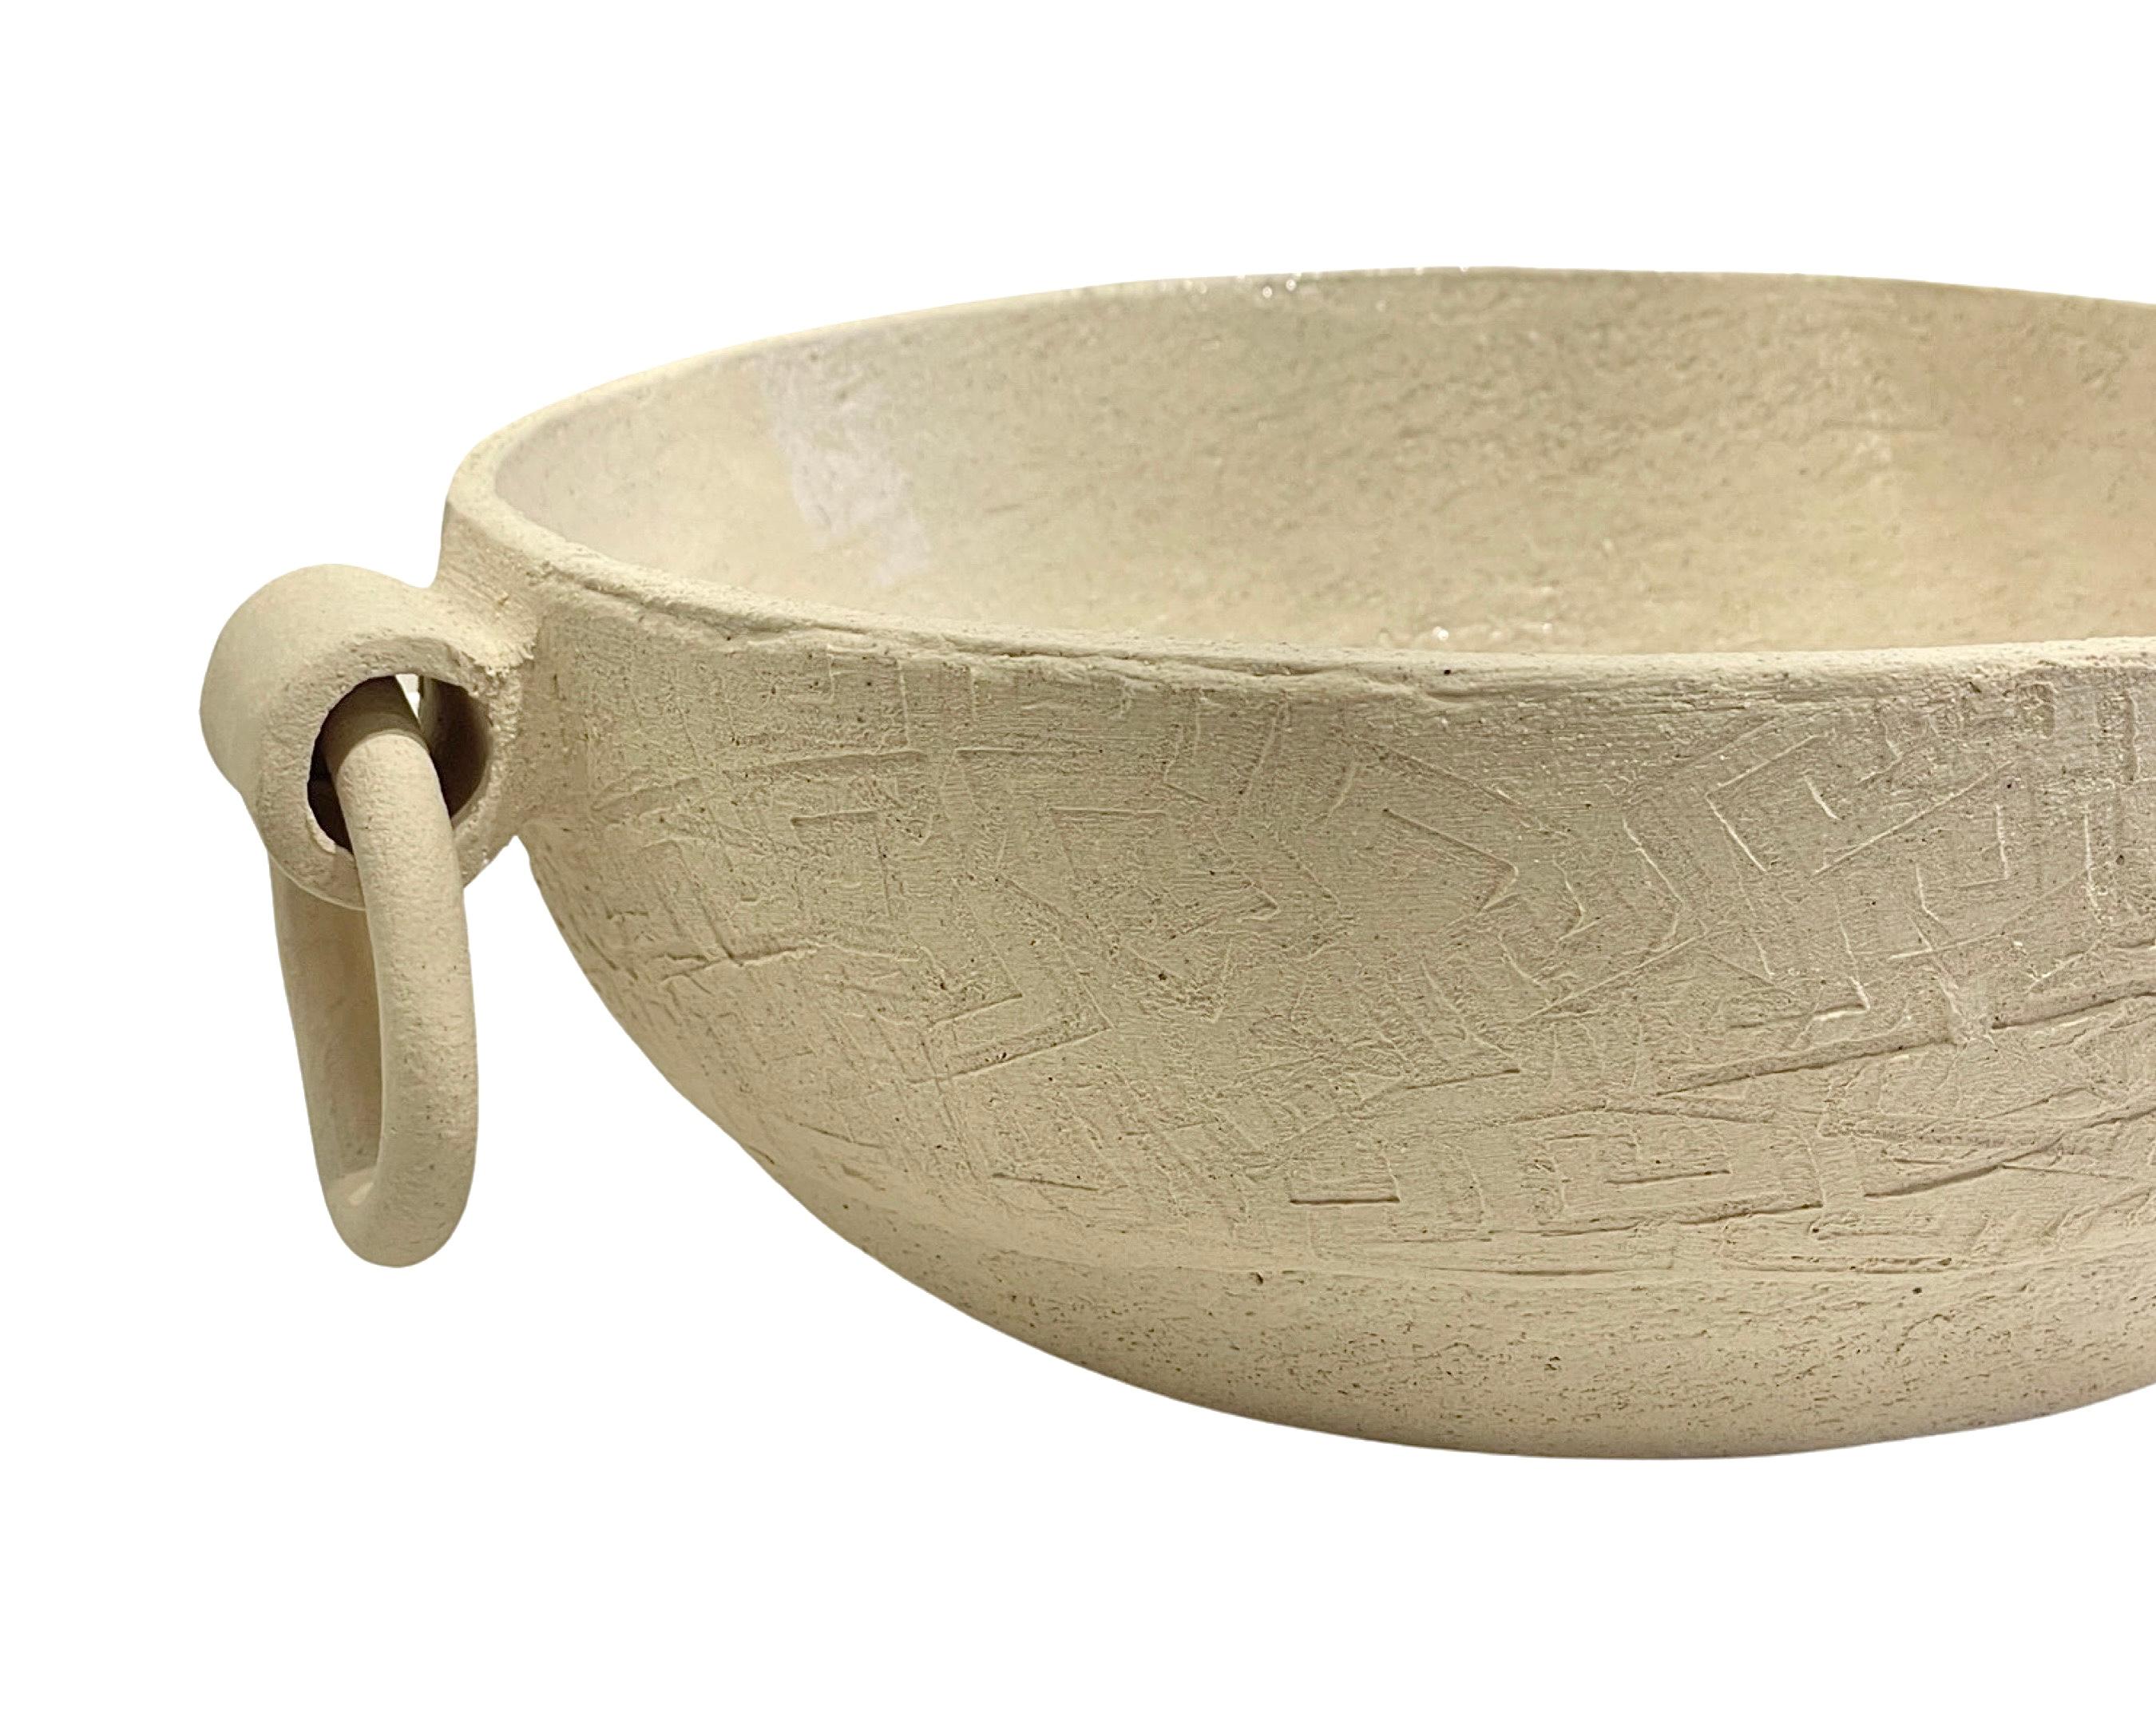 Turkish Artisanal Ceramic Centerpiece, Handcrafted Decorative Bowl, White